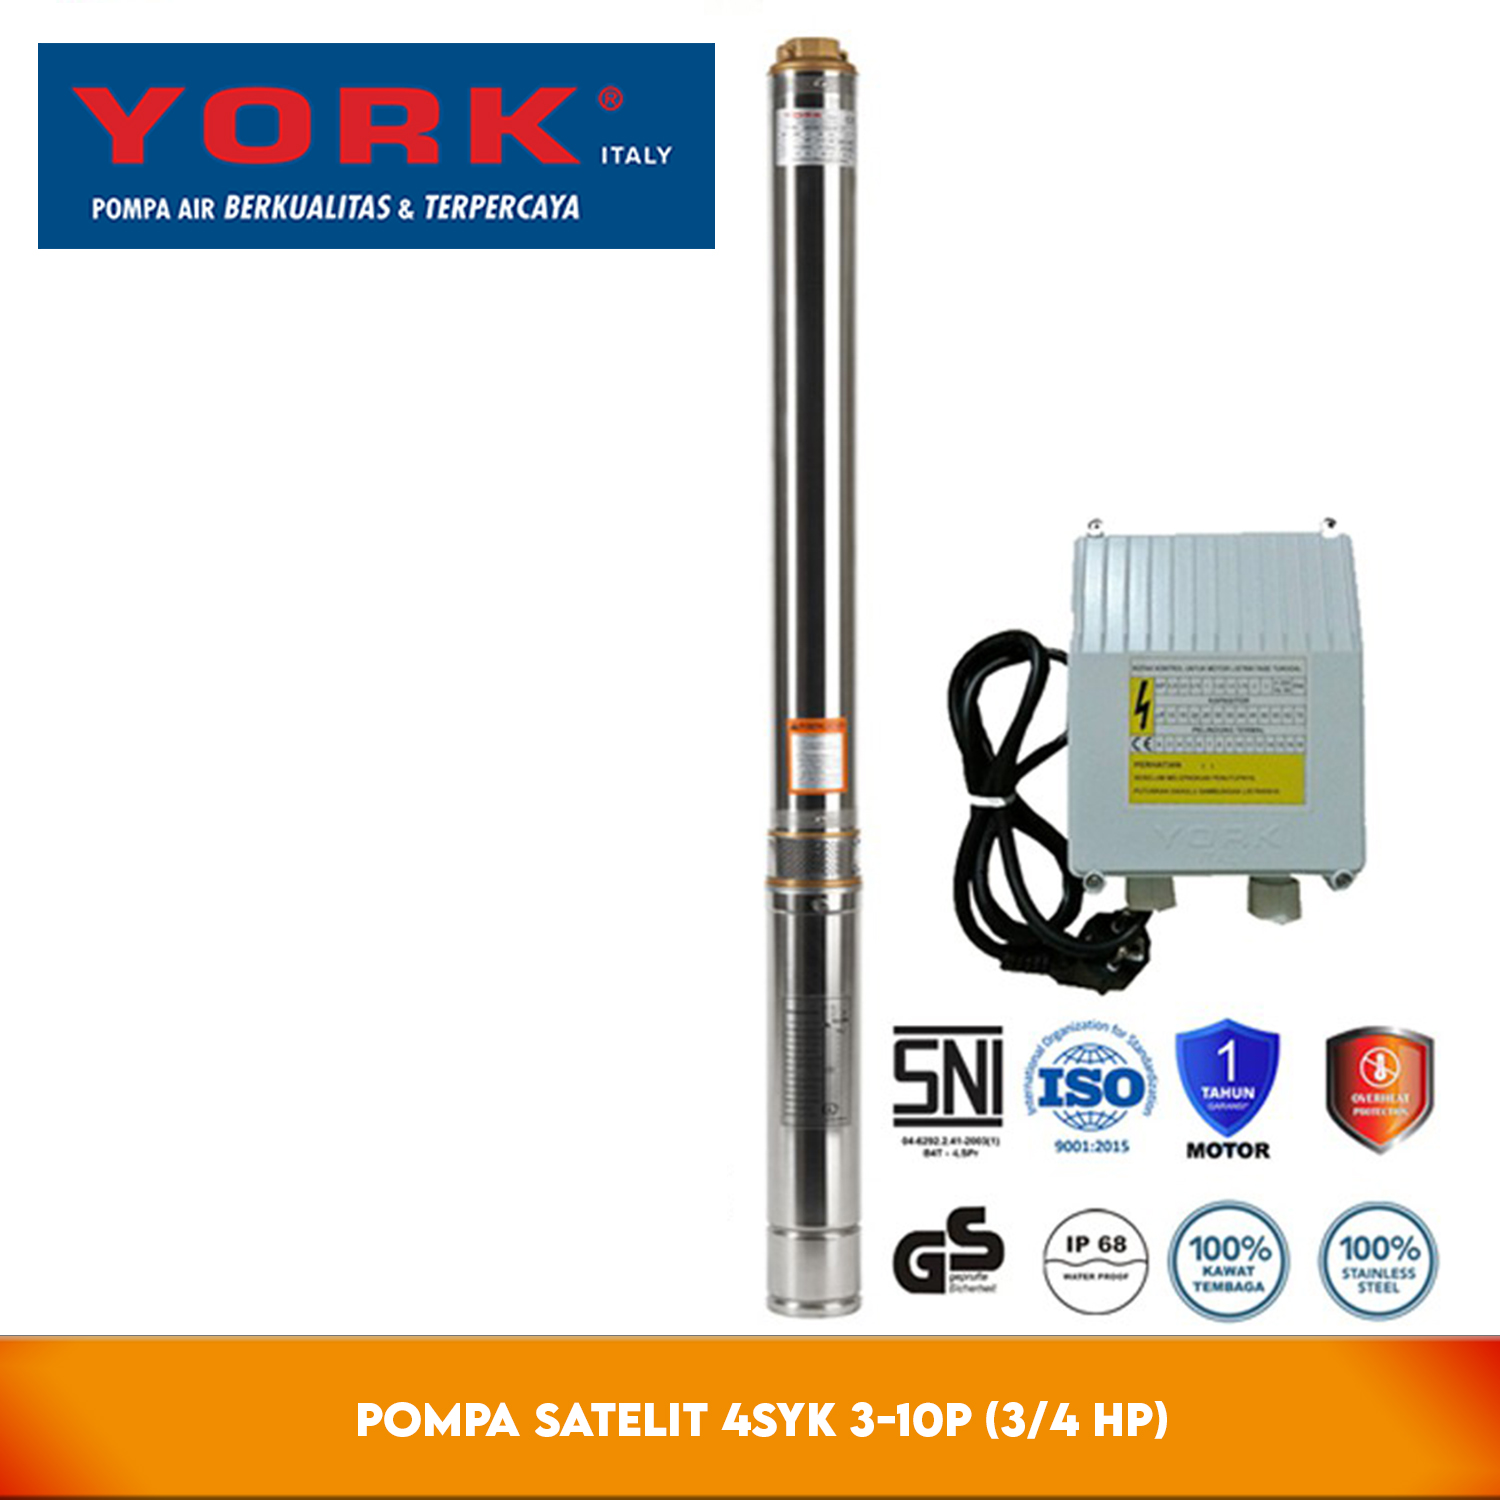 York 4SYK 3-10P (3/4 HP) + C.BOX + 50 M - Pompa Satelit 